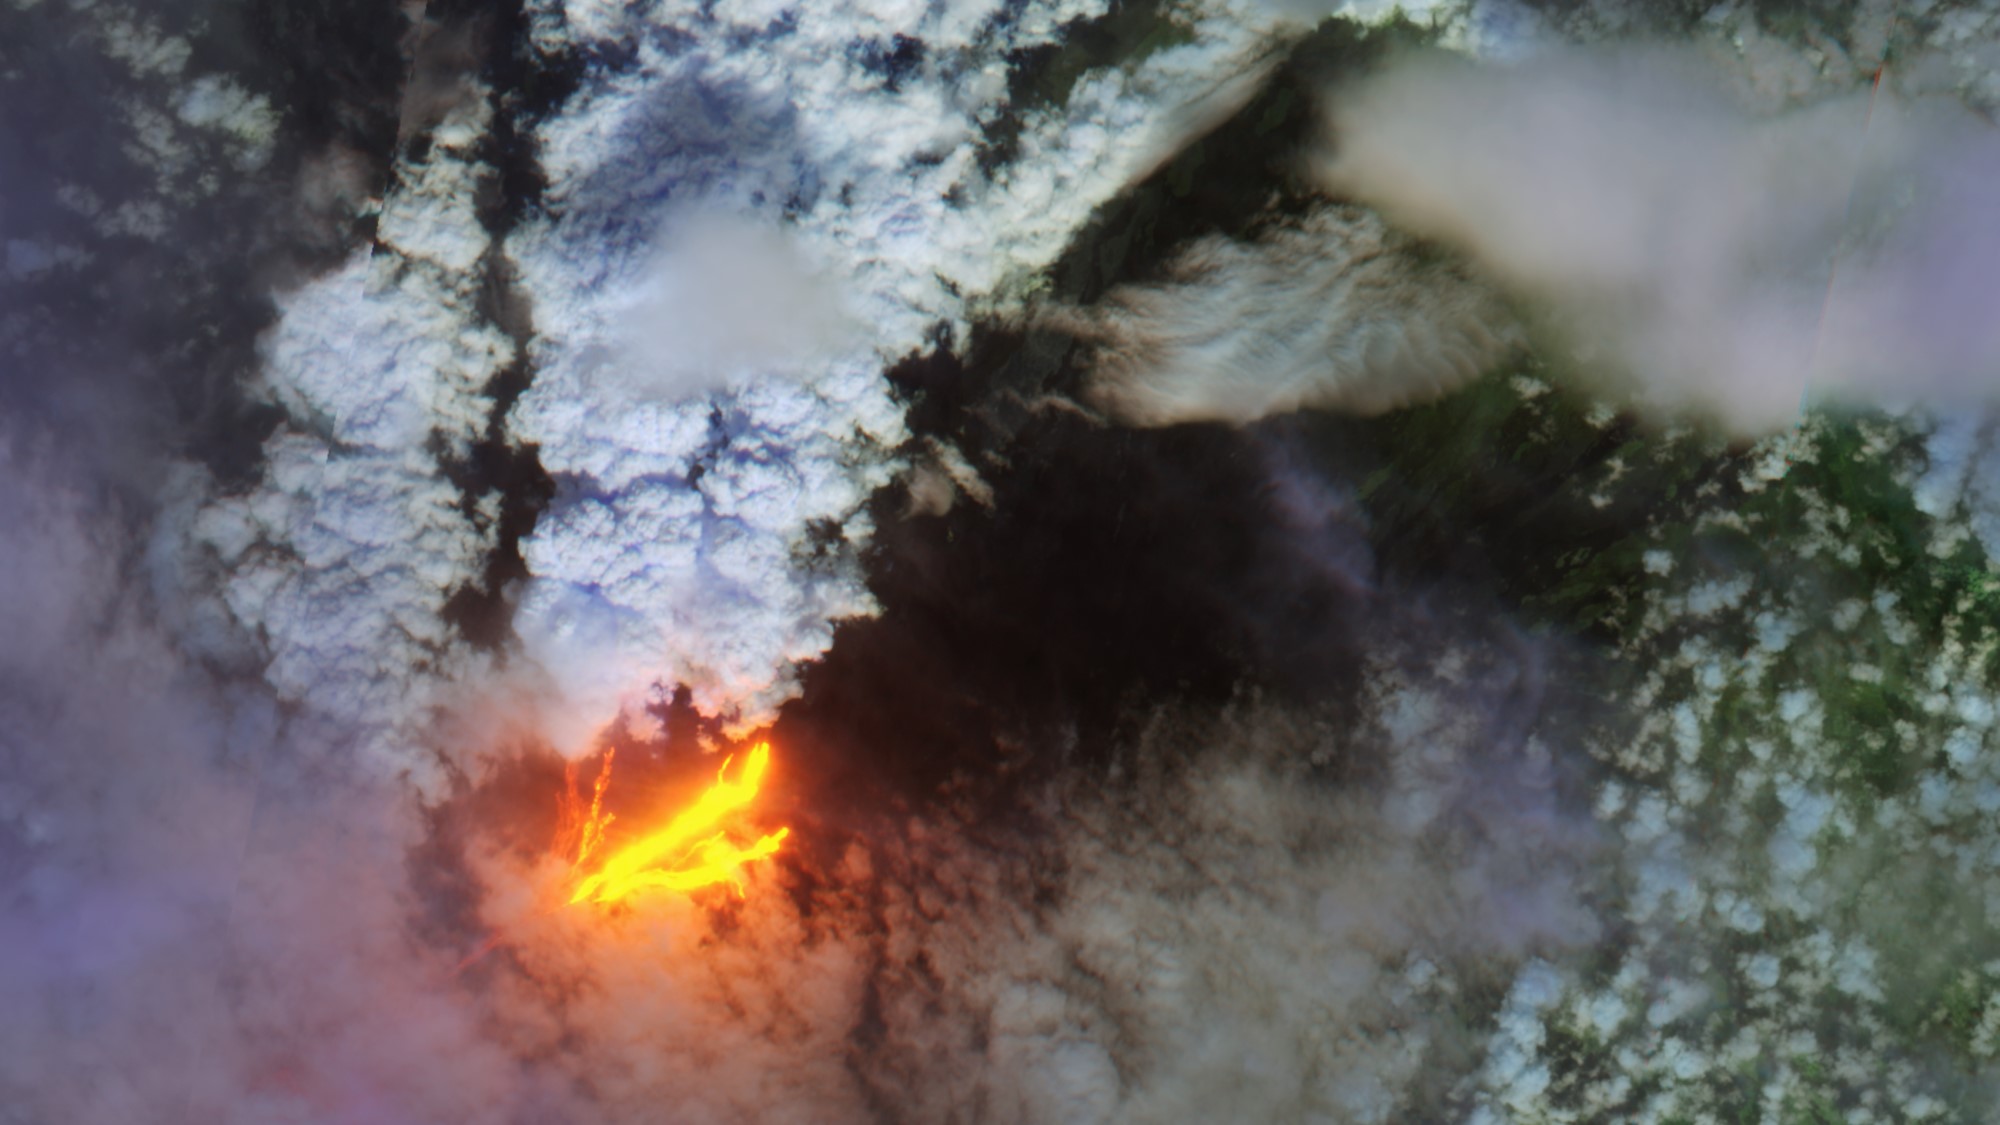 Satellites track glowing lava from Hawaii's Mauna Loa eruption (photos)